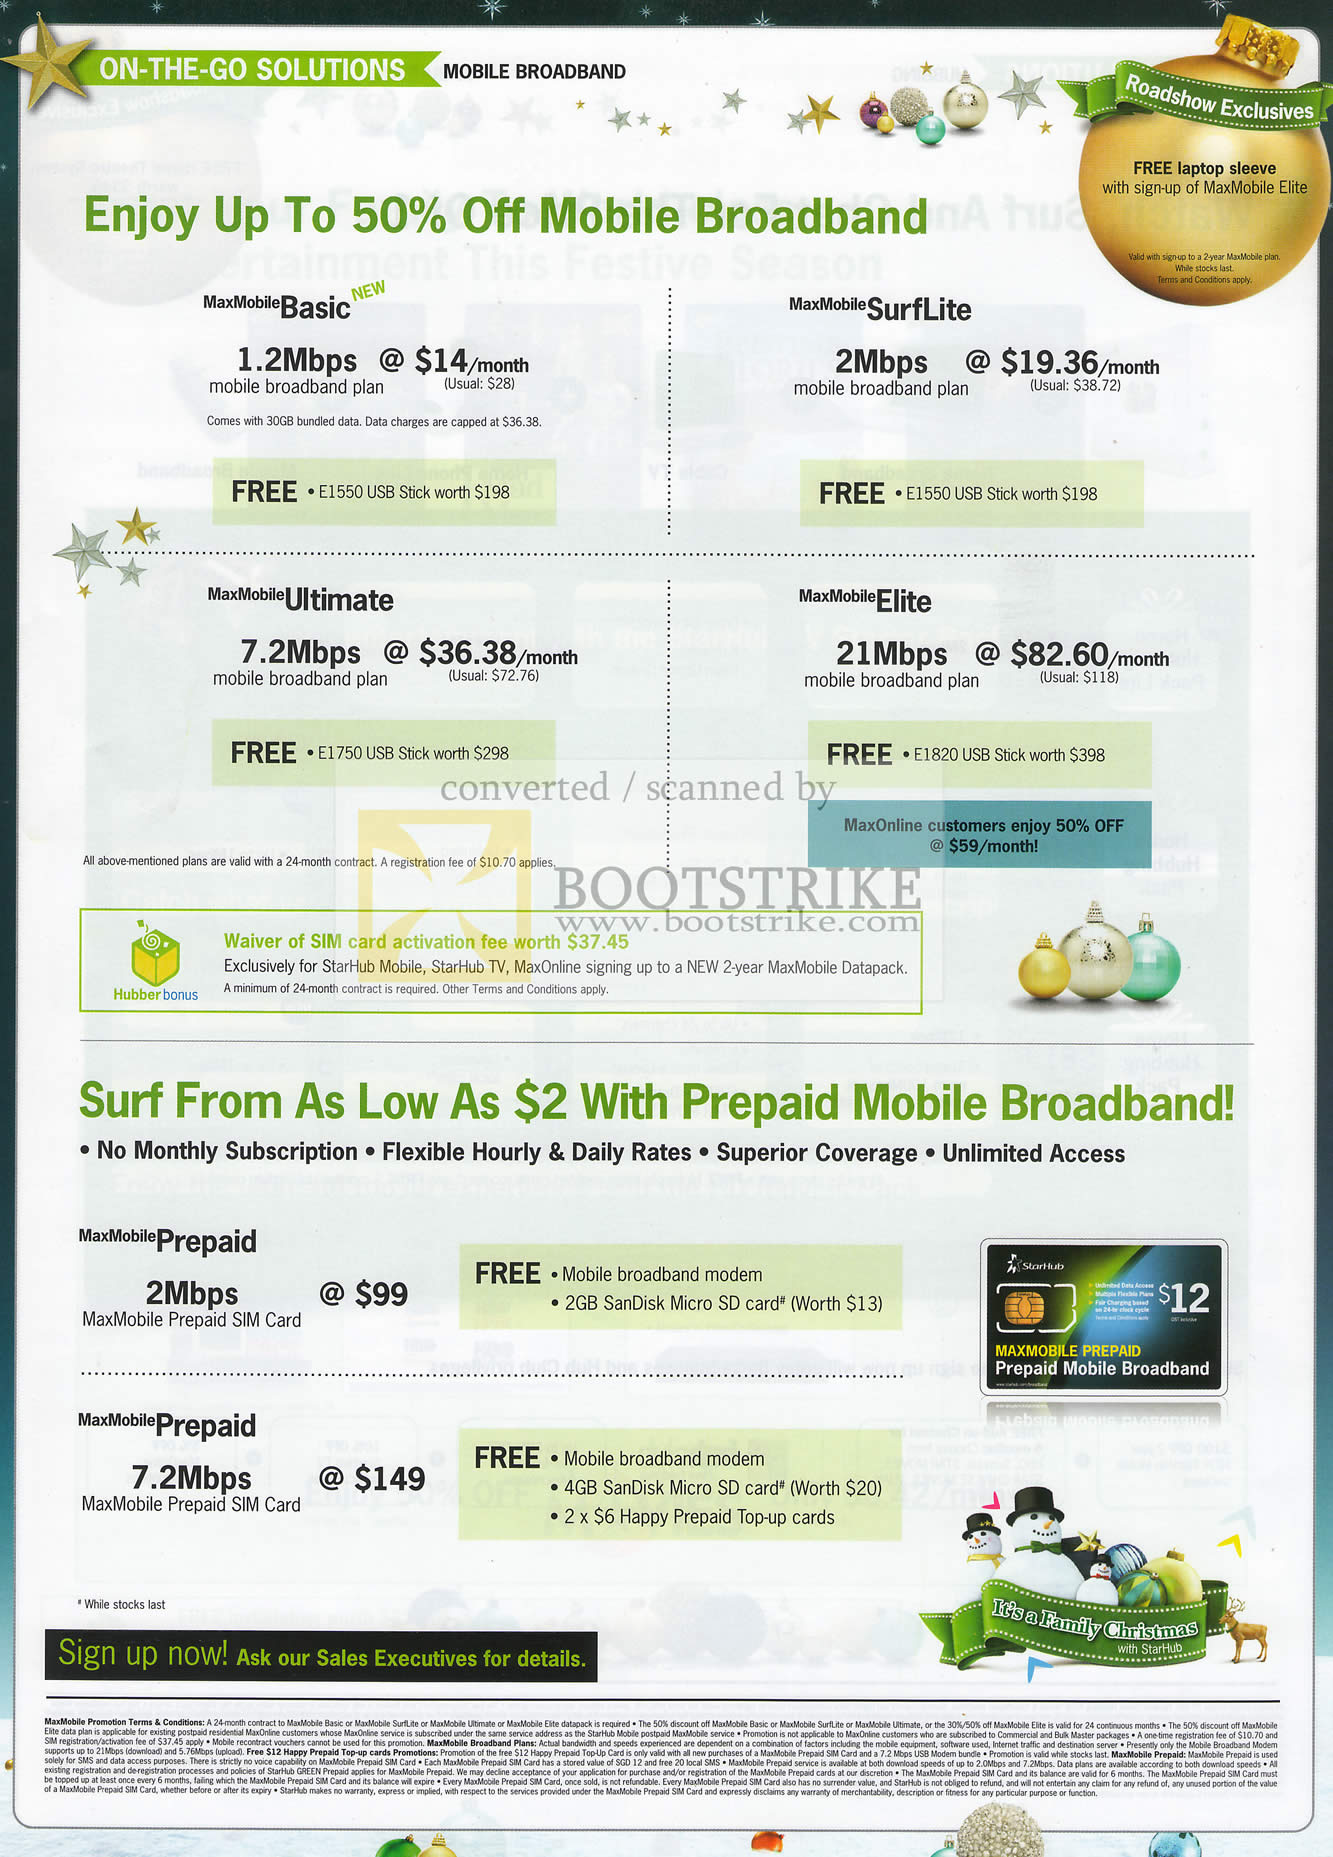 Sitex 2009 price list image brochure of Starhub Mobile Broadband MaxMobile Basic SurfLite Ultimate Elite